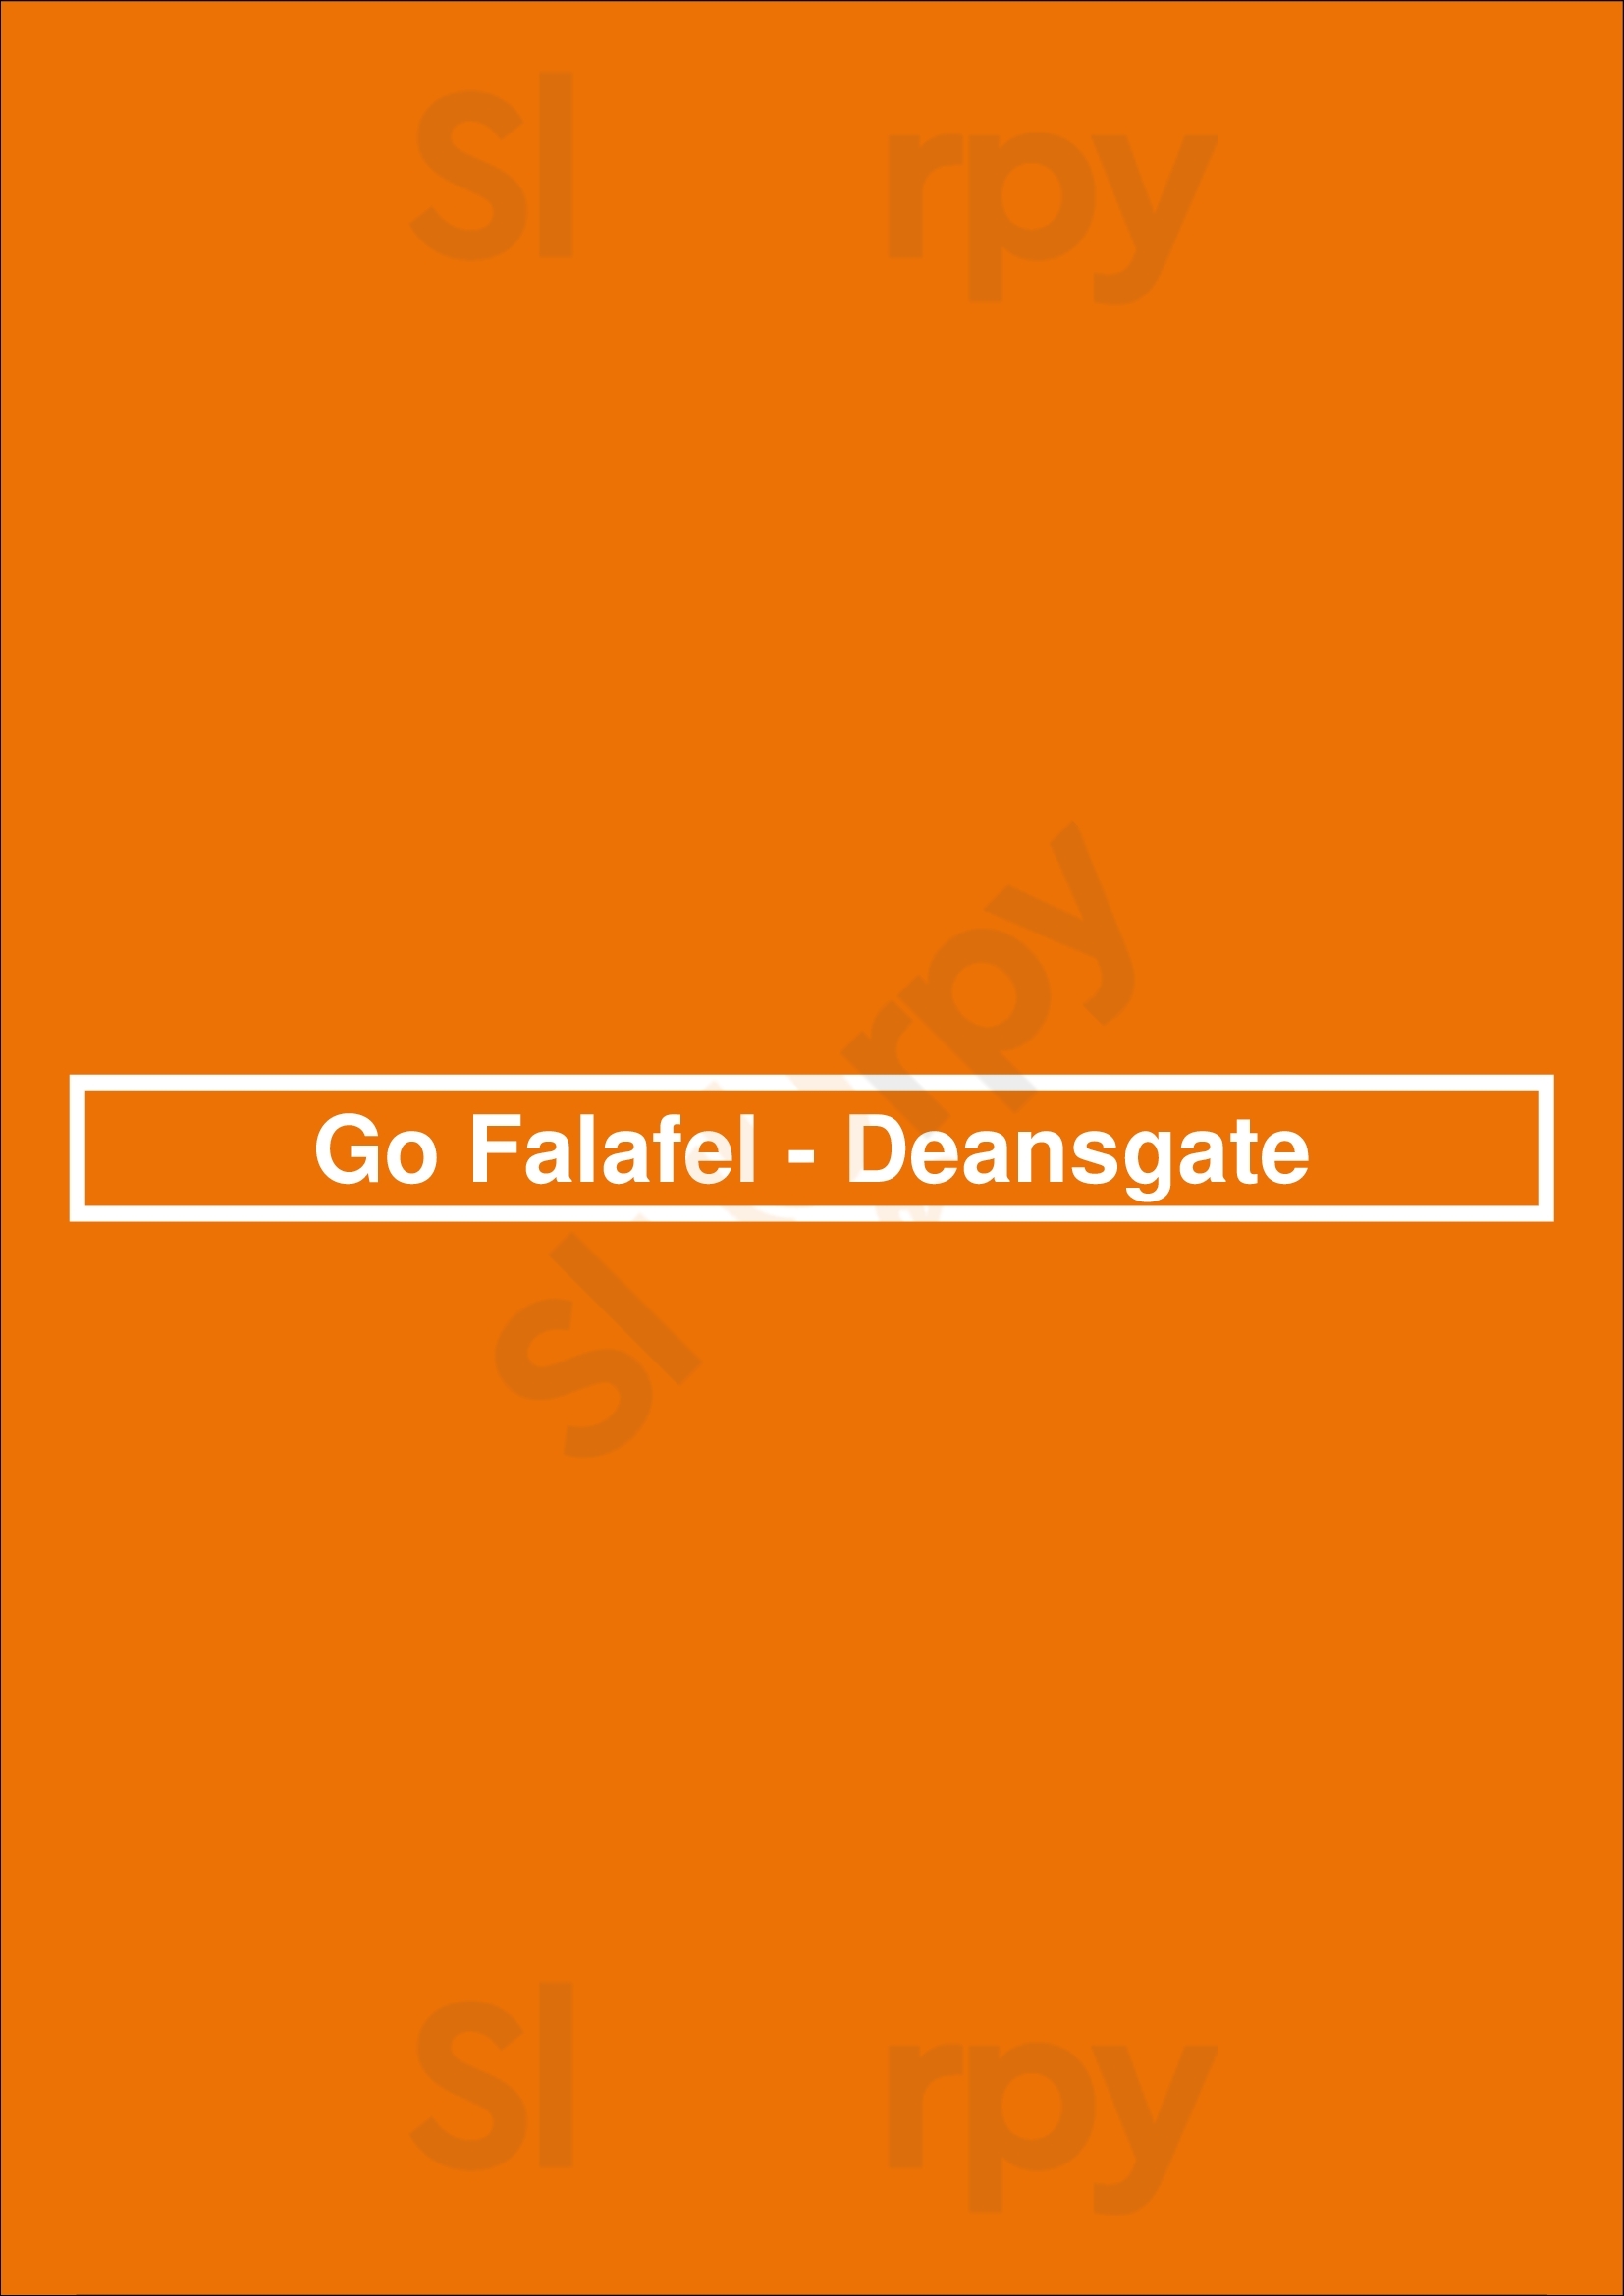 Go Falafel - Deansgate Manchester Menu - 1